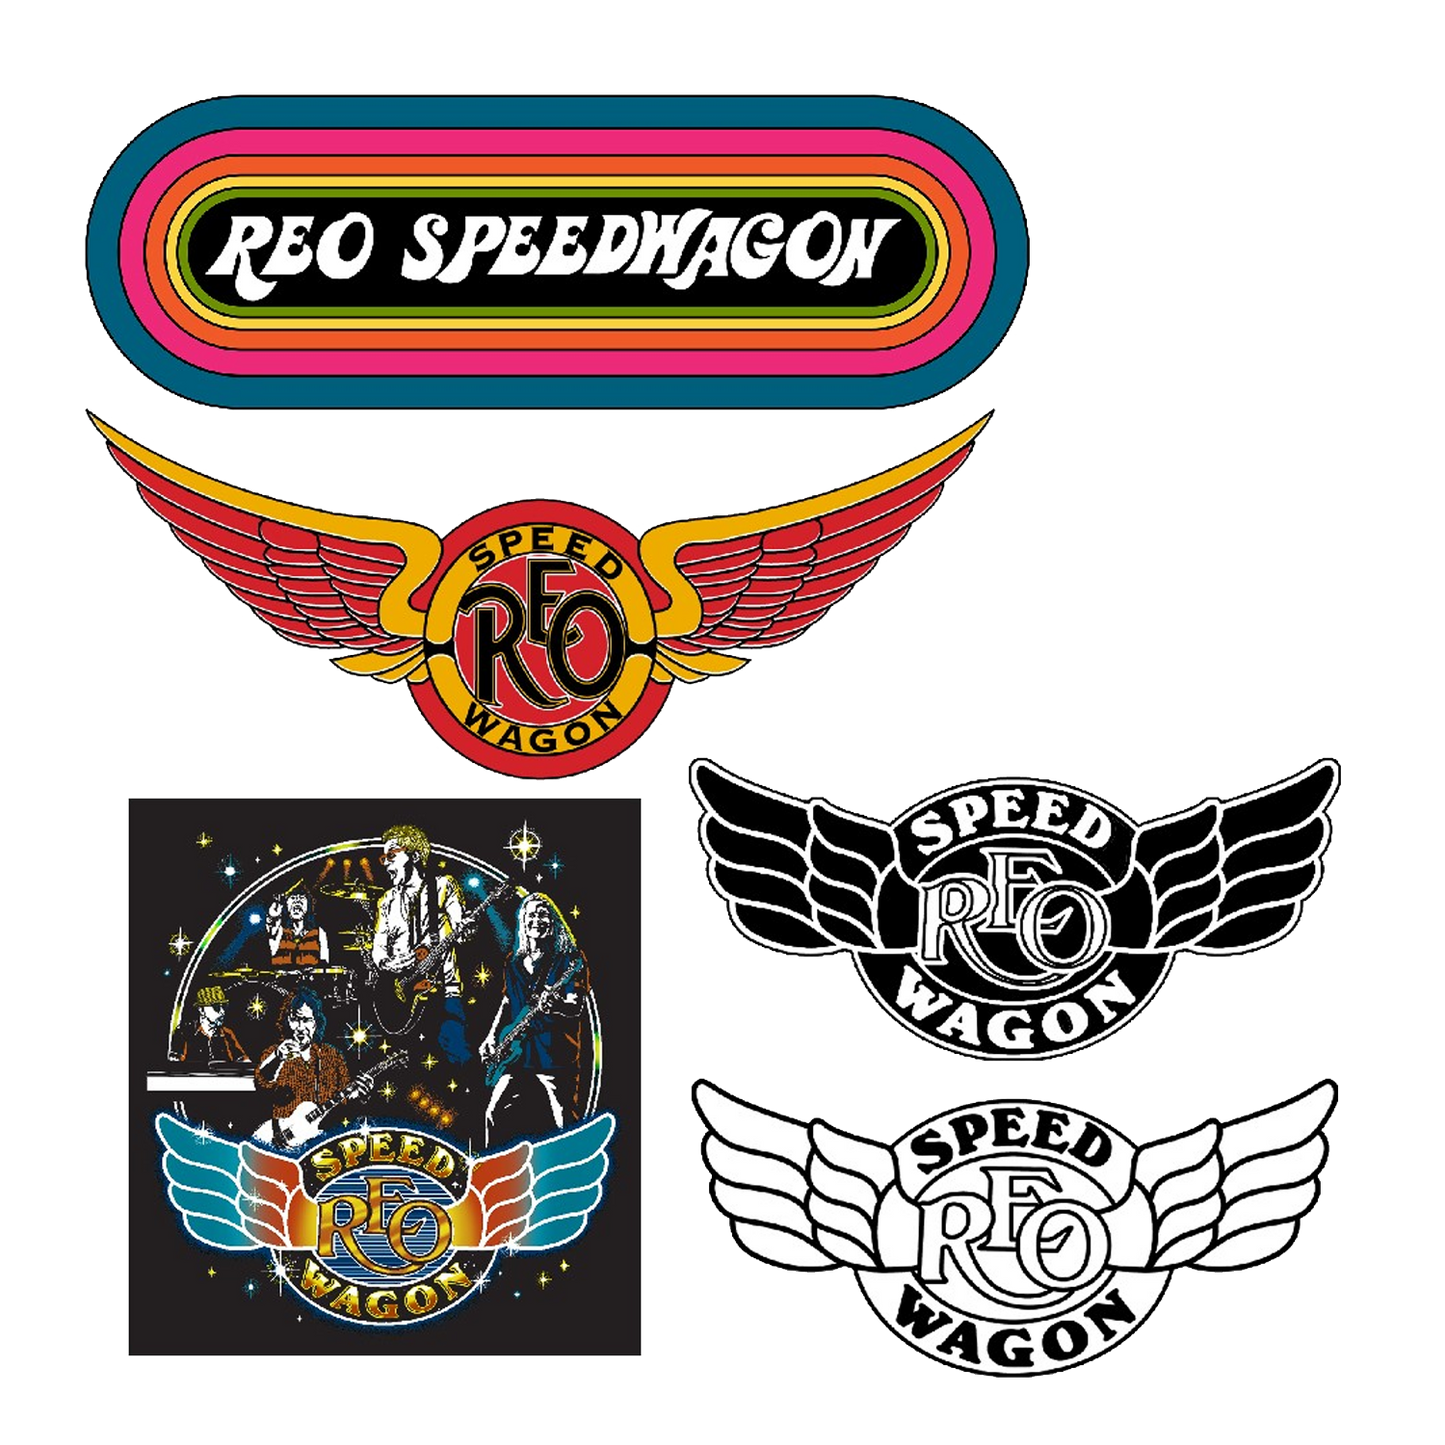 REO Speedwagon The Essential Reo Speedwagon Album Cover Sticker